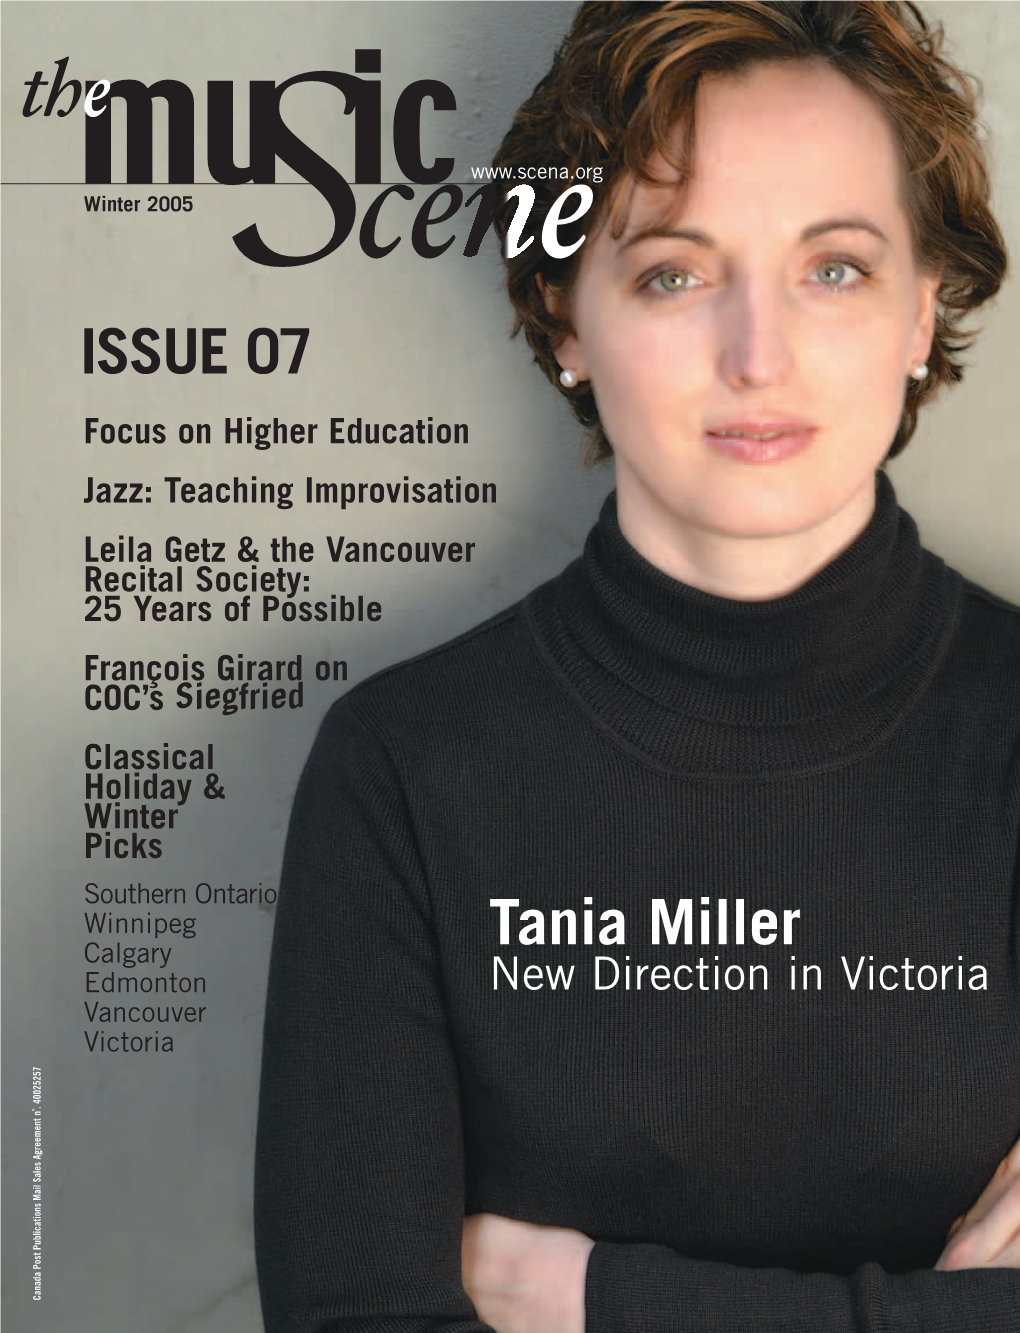 The Music Scene Winter 2005 Issue